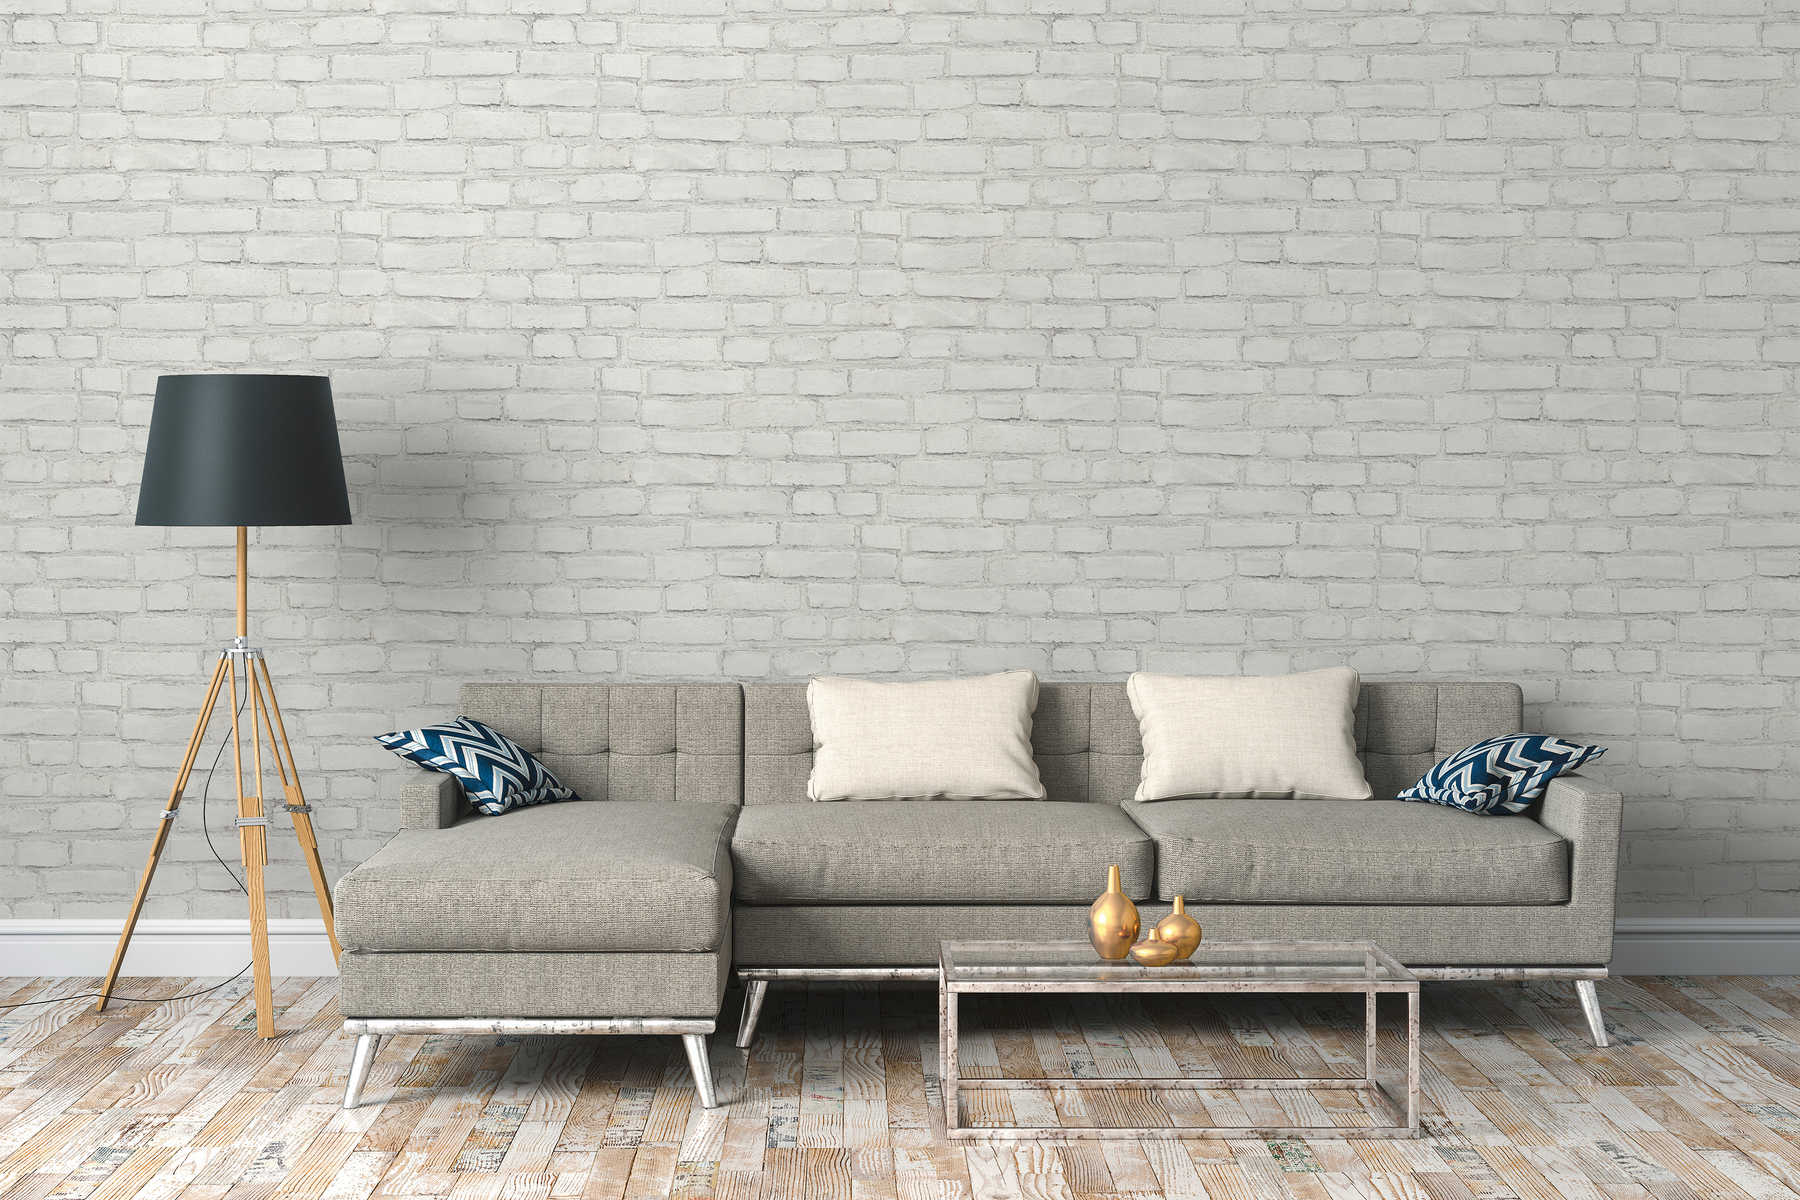             Wallpaper with wall optics, painted brick wall - white, grey
        